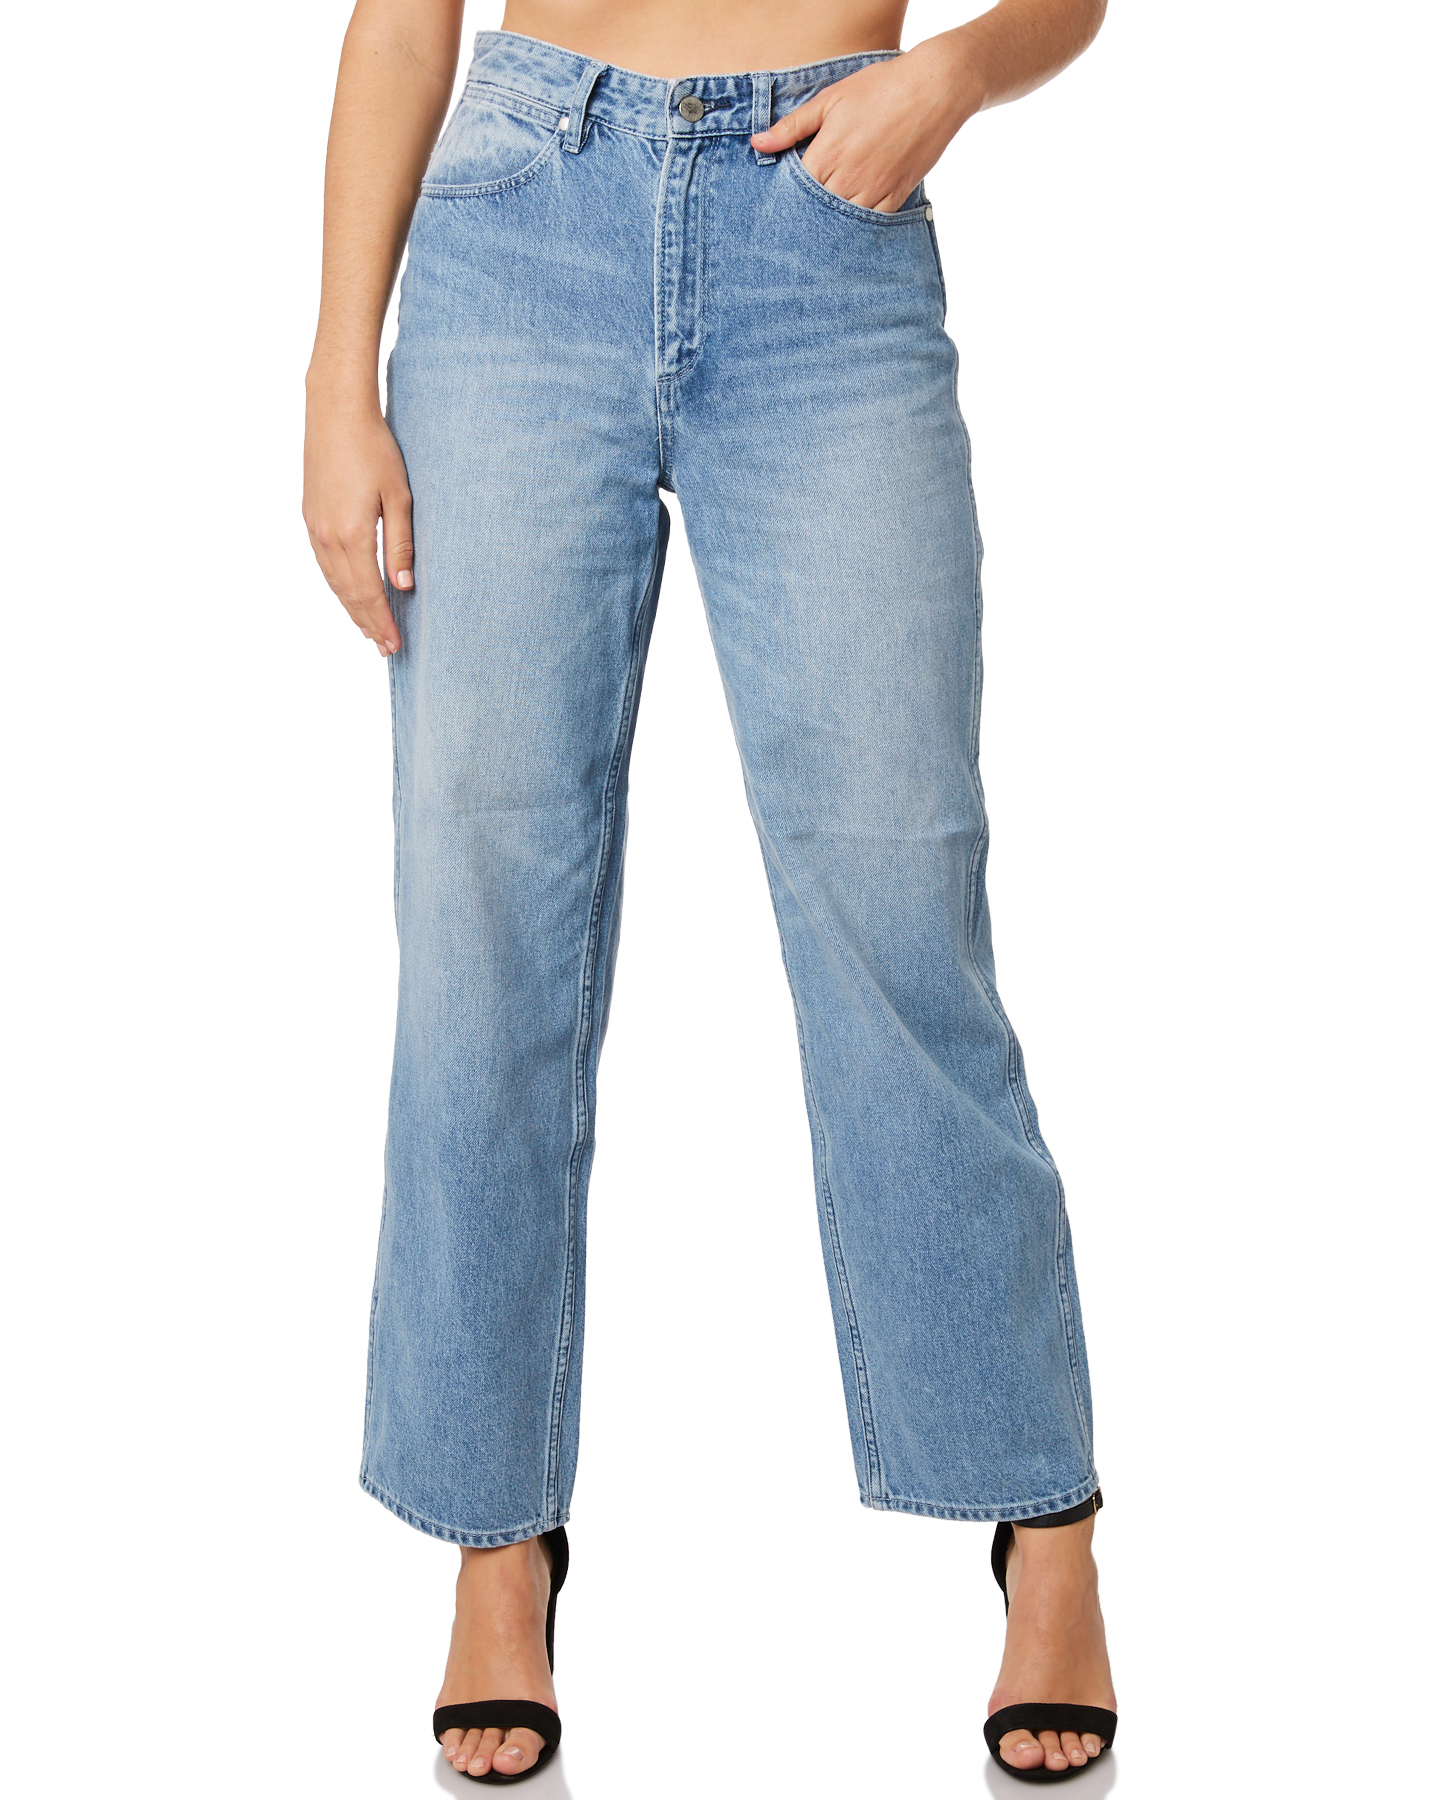 Wrangler Jeans Fit Chart